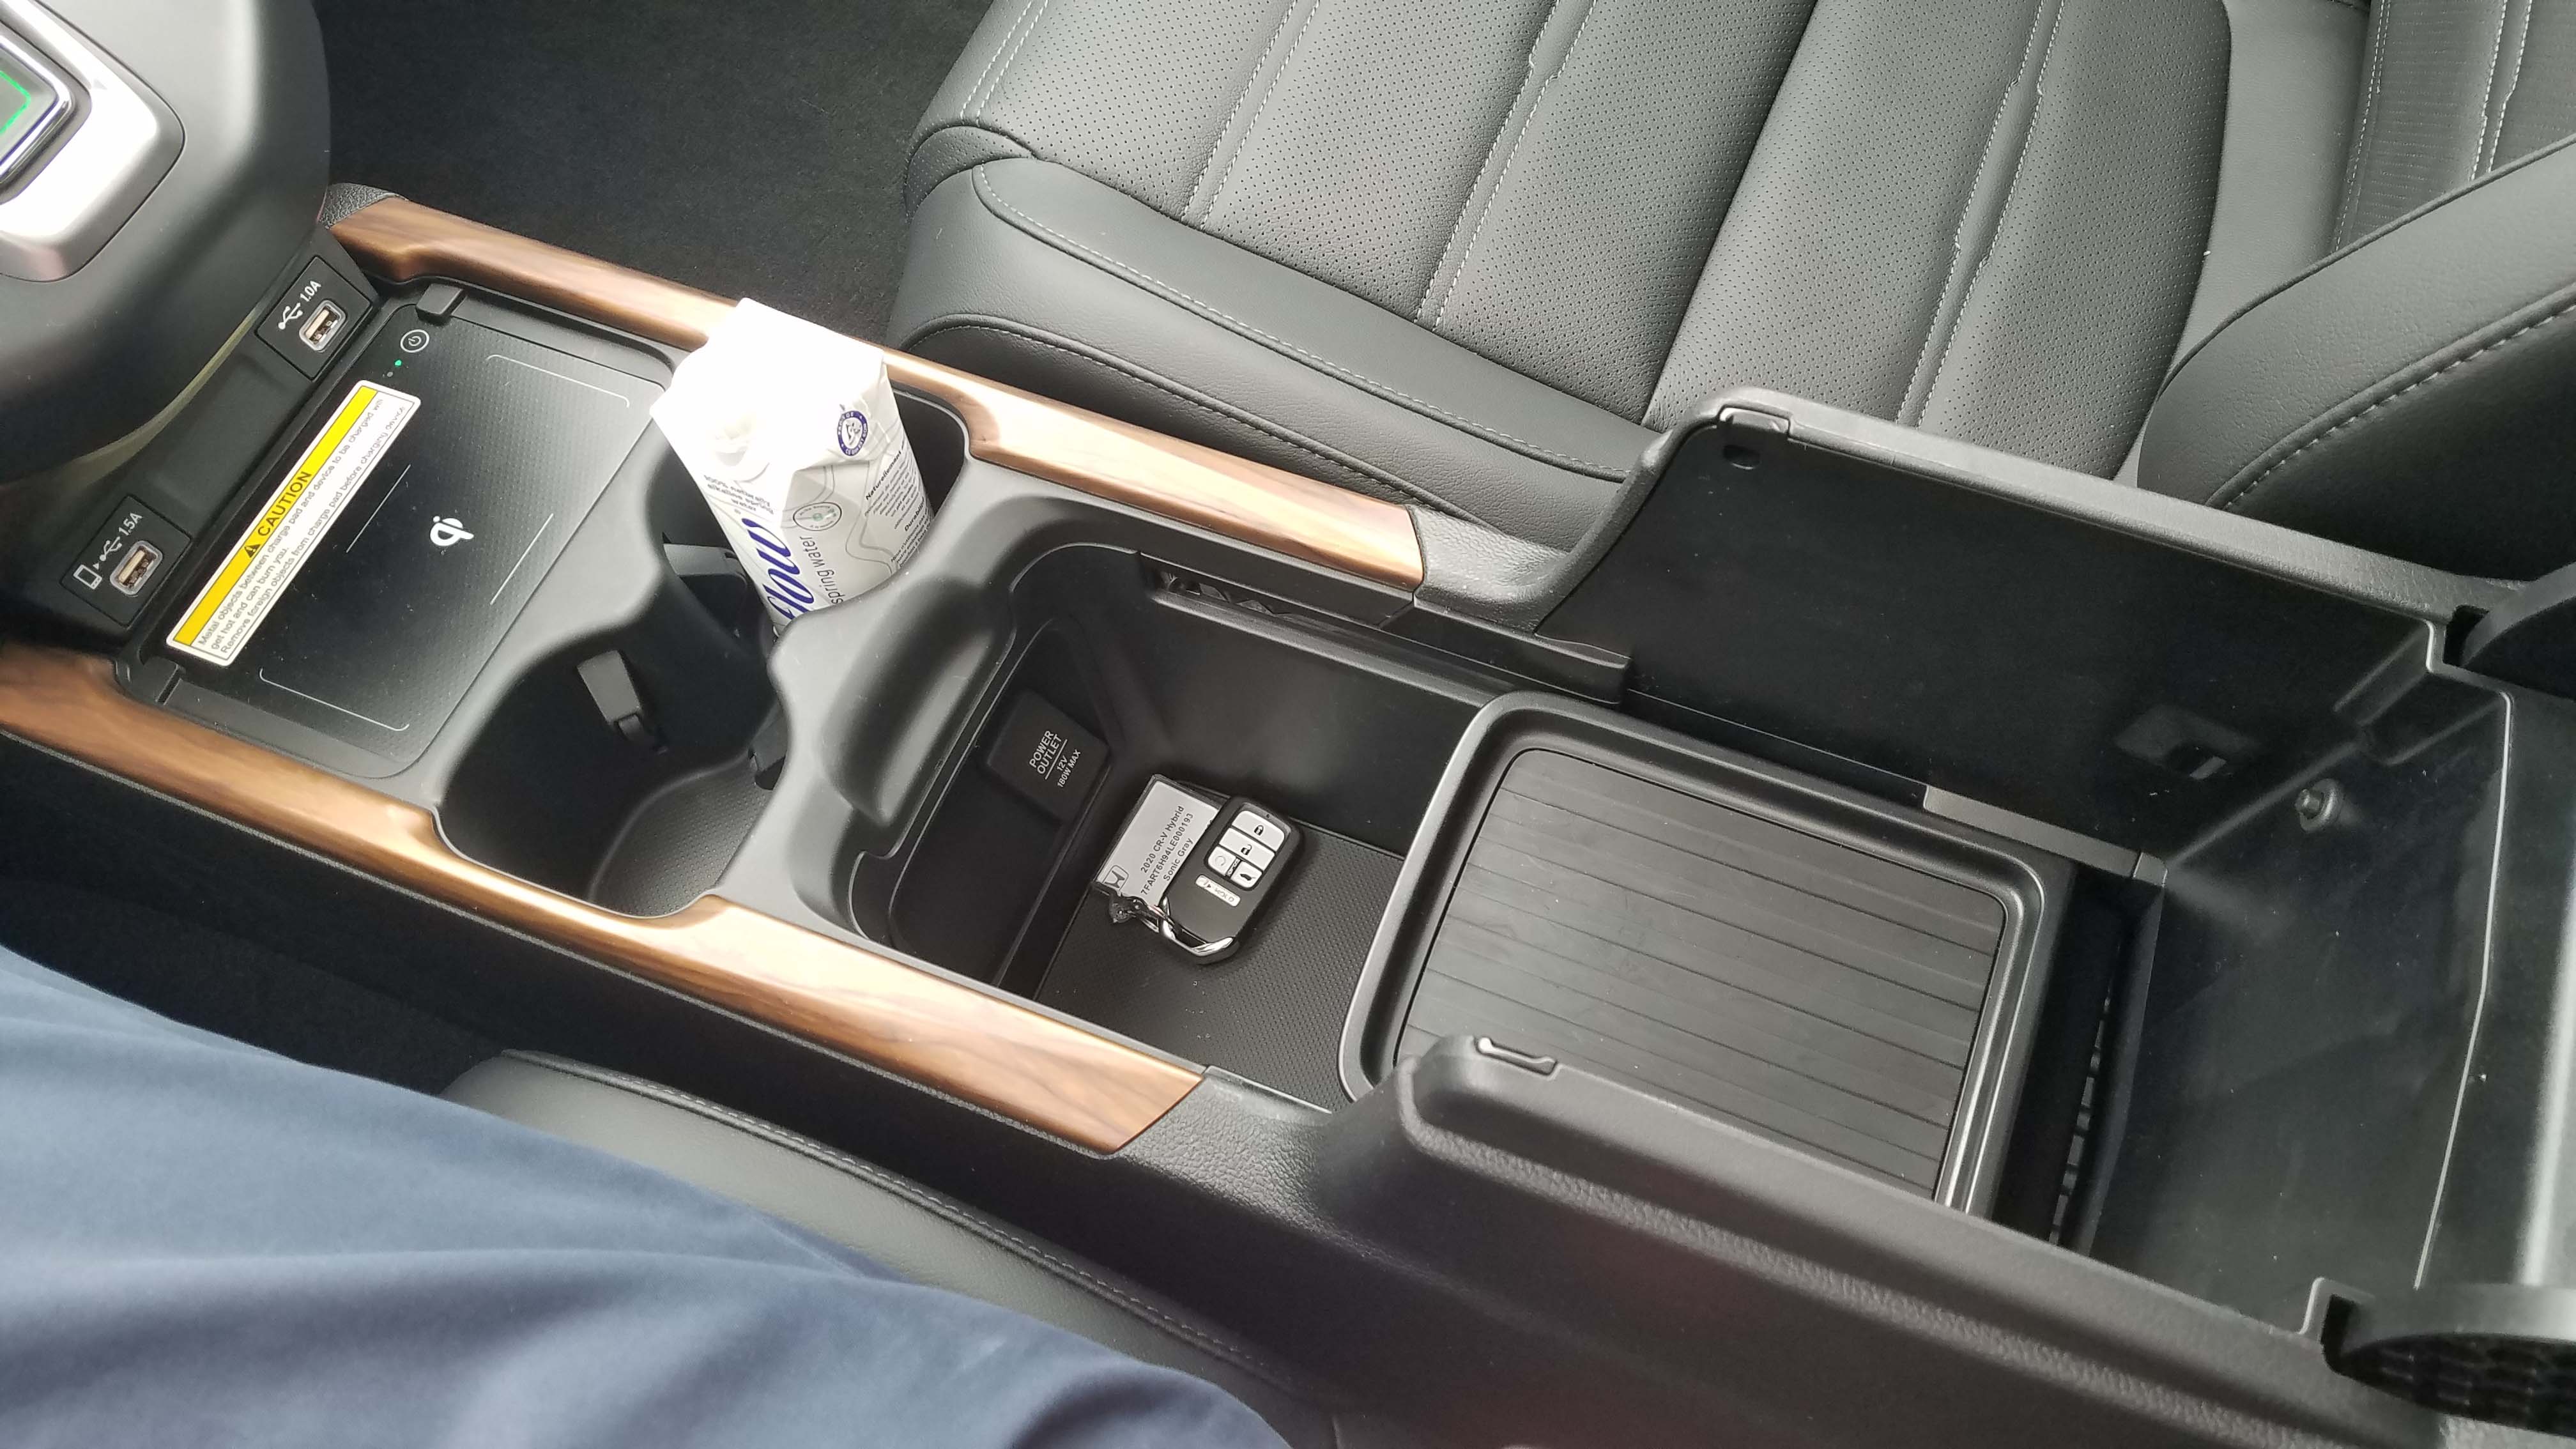 Like all Hondas, the 2020 Honda CR-V Hybrid has configurable console storage space.